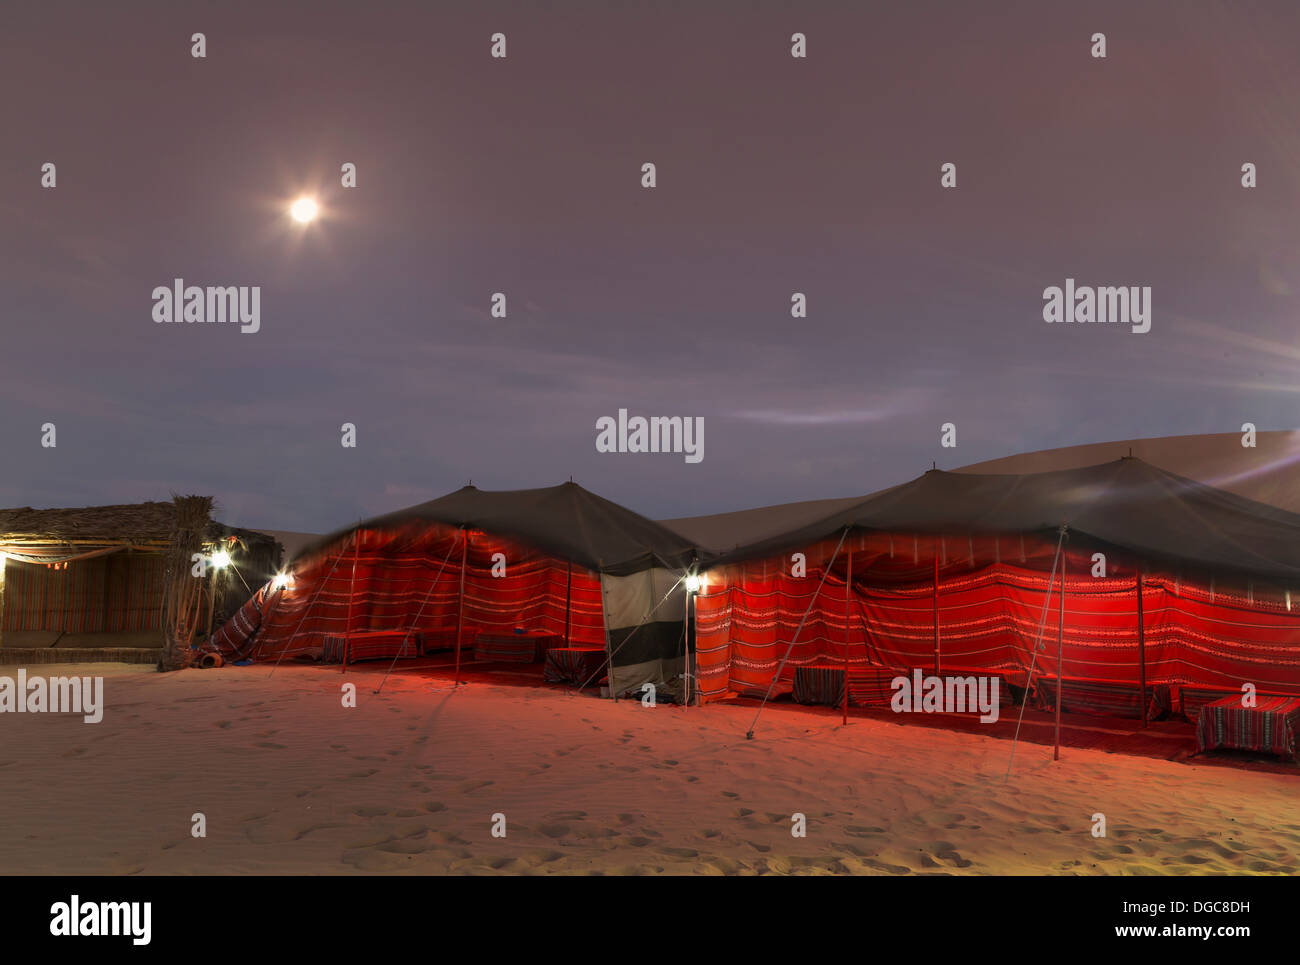 Bedouin tents at night in desert, Adu Dhabi, United Arab Emirates Stock Photo